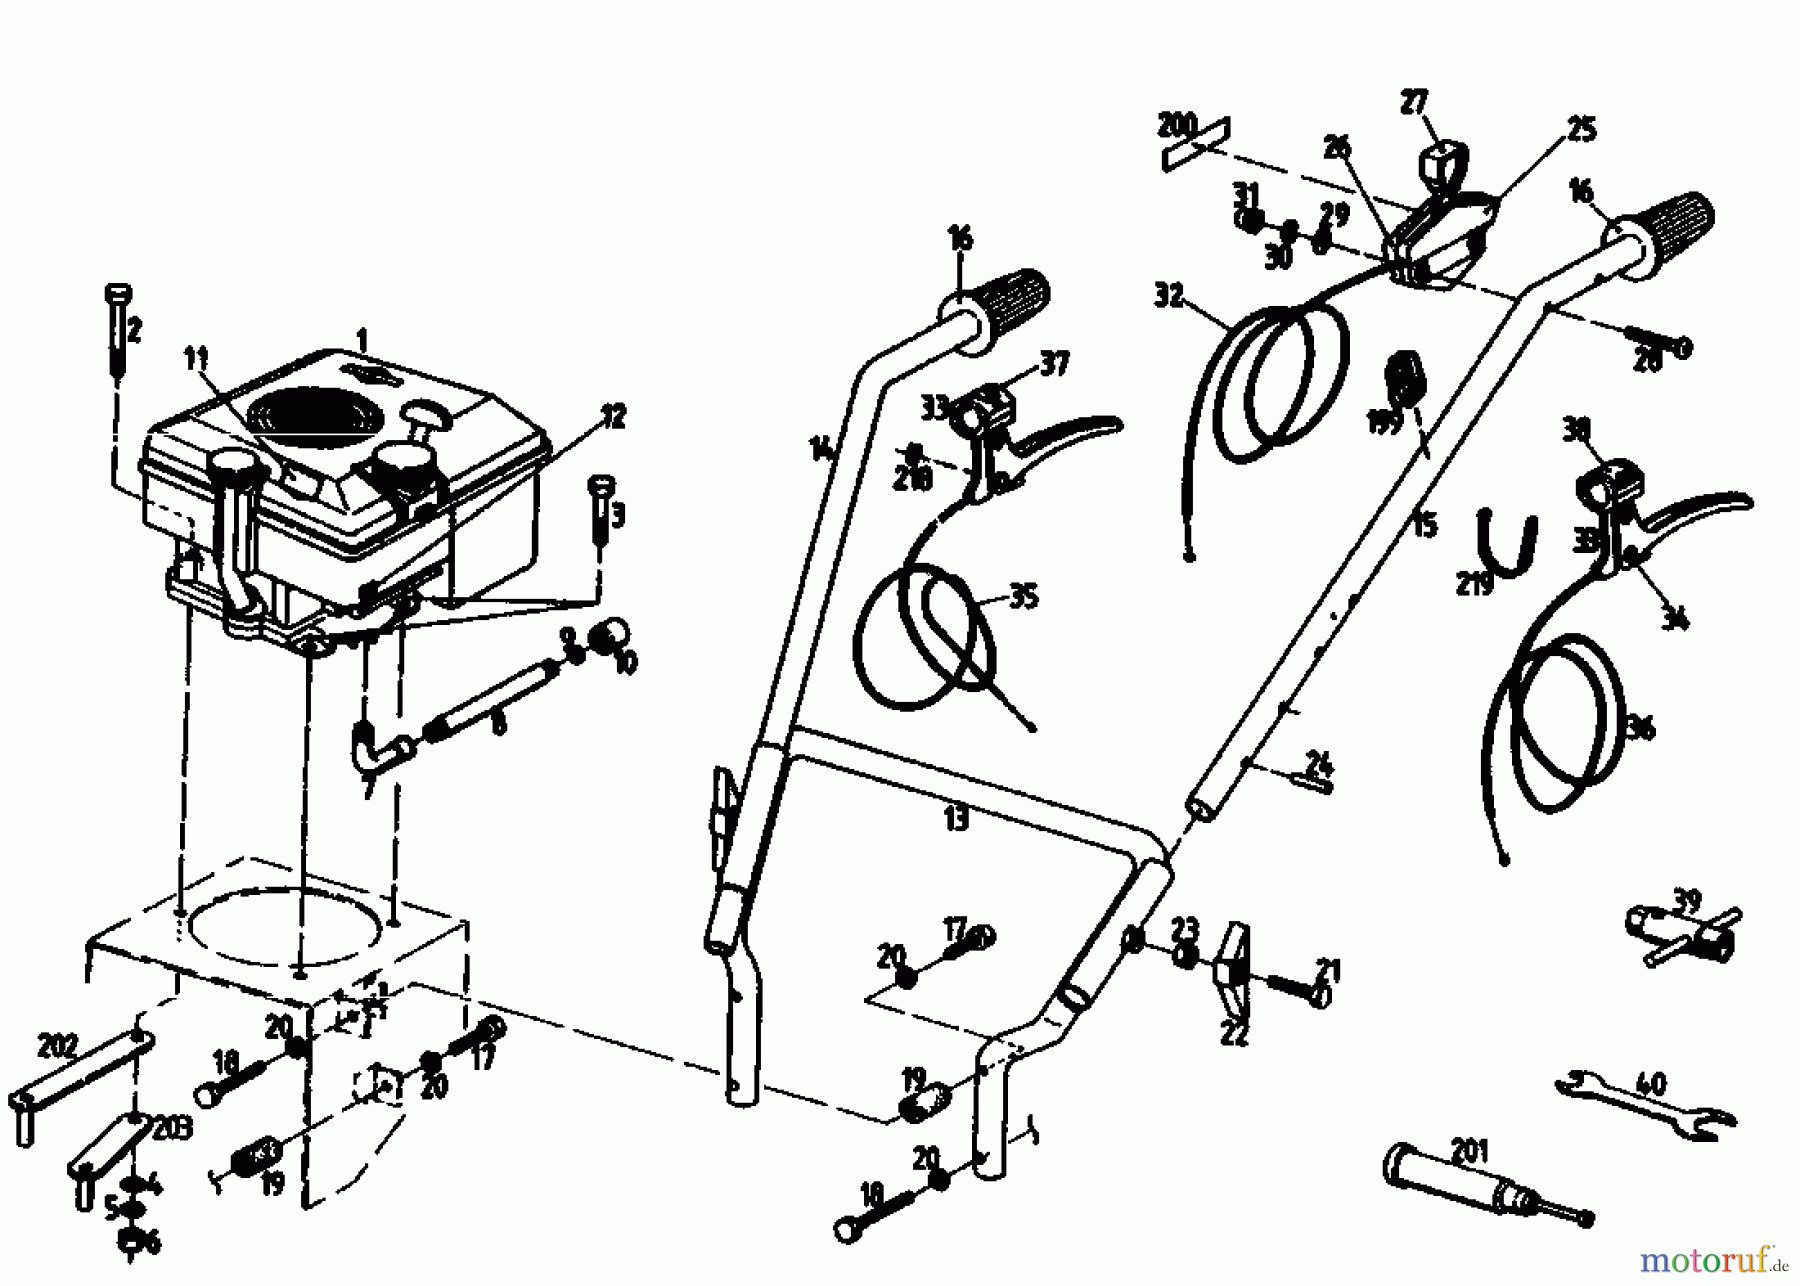  Gutbrod Cutter bar mower BM 710 07515.02  (1989) Handle